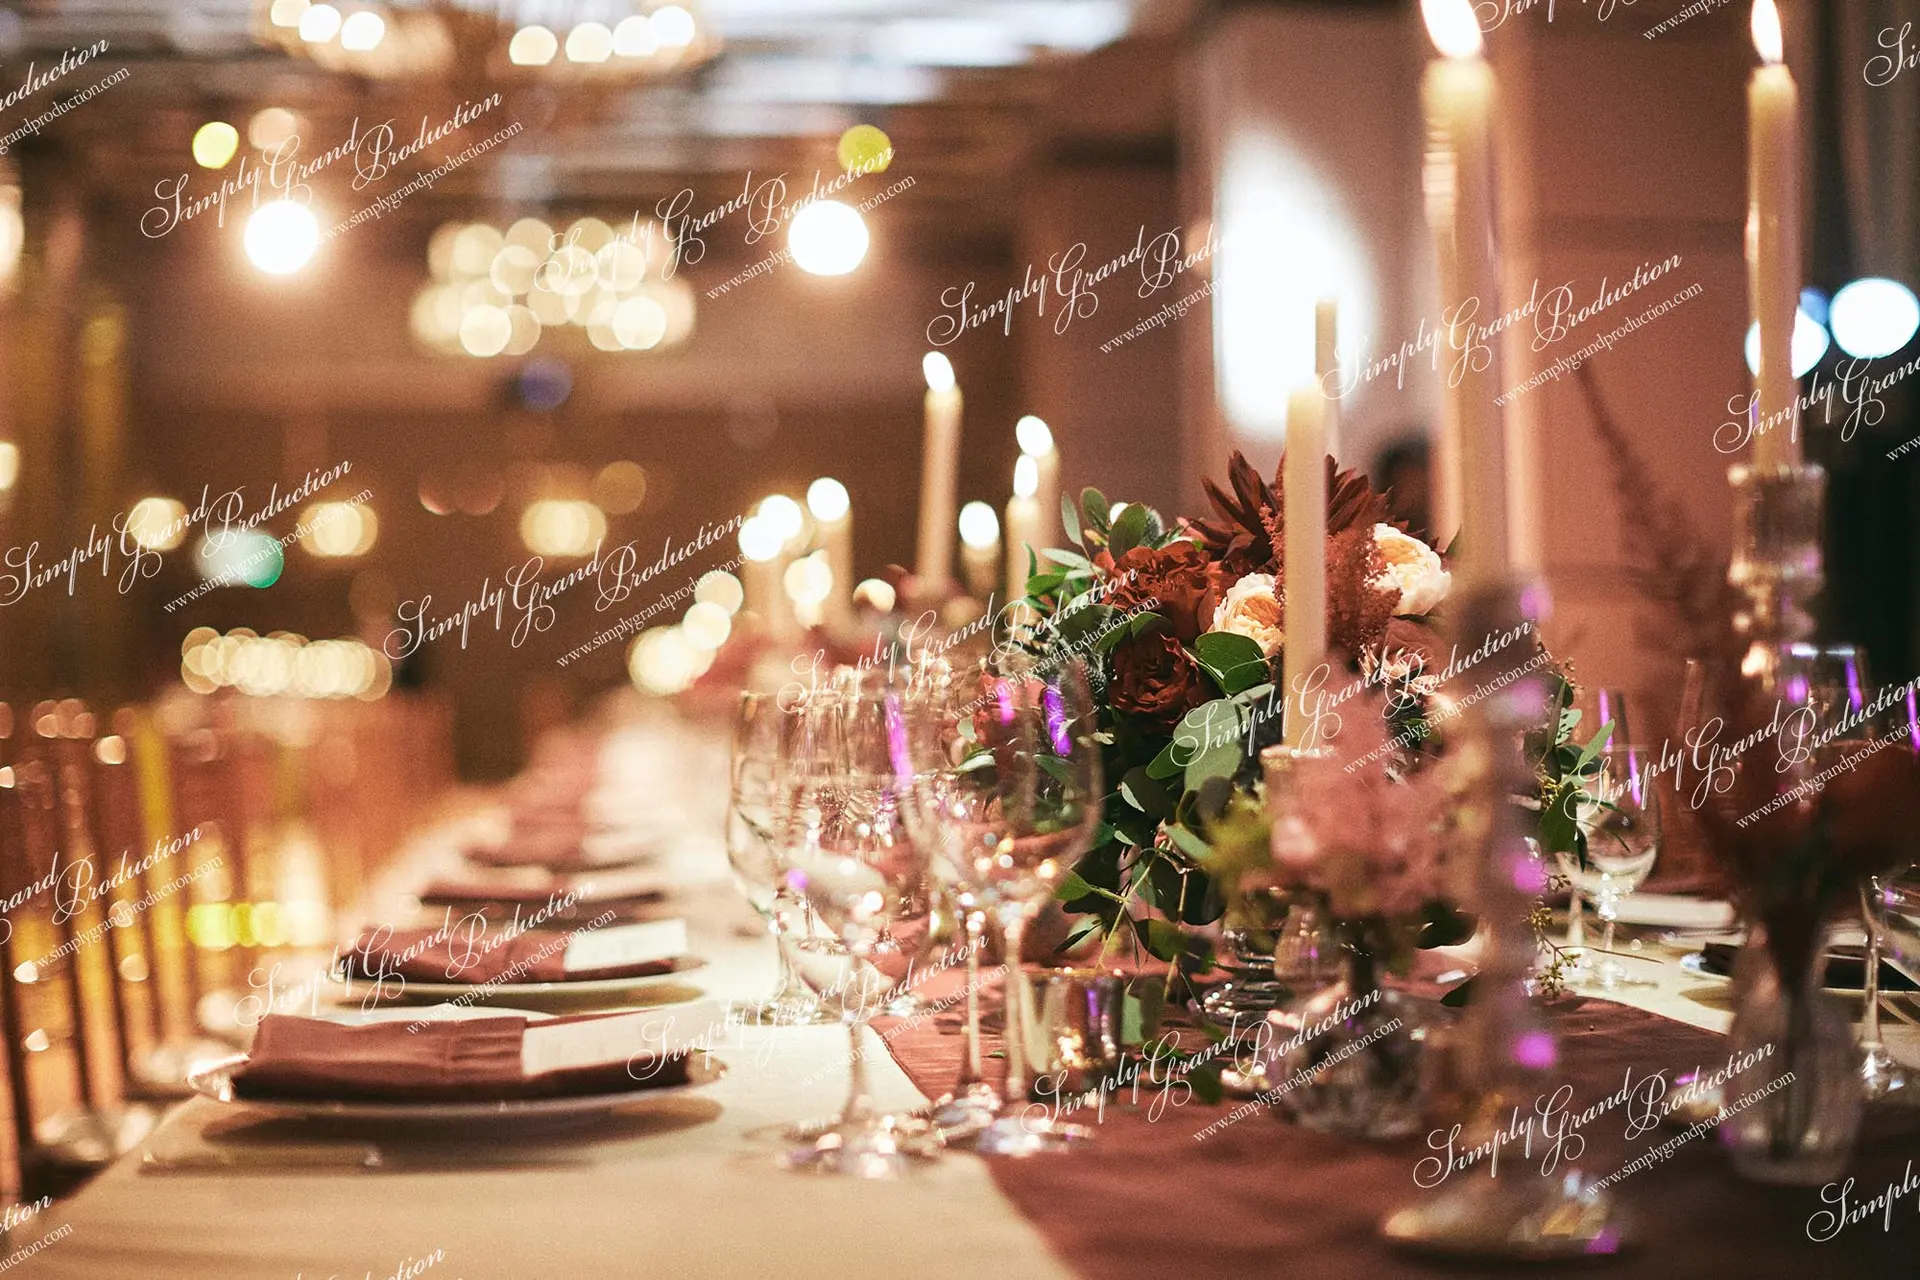 Simply_Grand_Production_Ballroom_wedding_decoration_banquet_dinner_parties_centerpiece_burgundy_glamour_1_8_wm